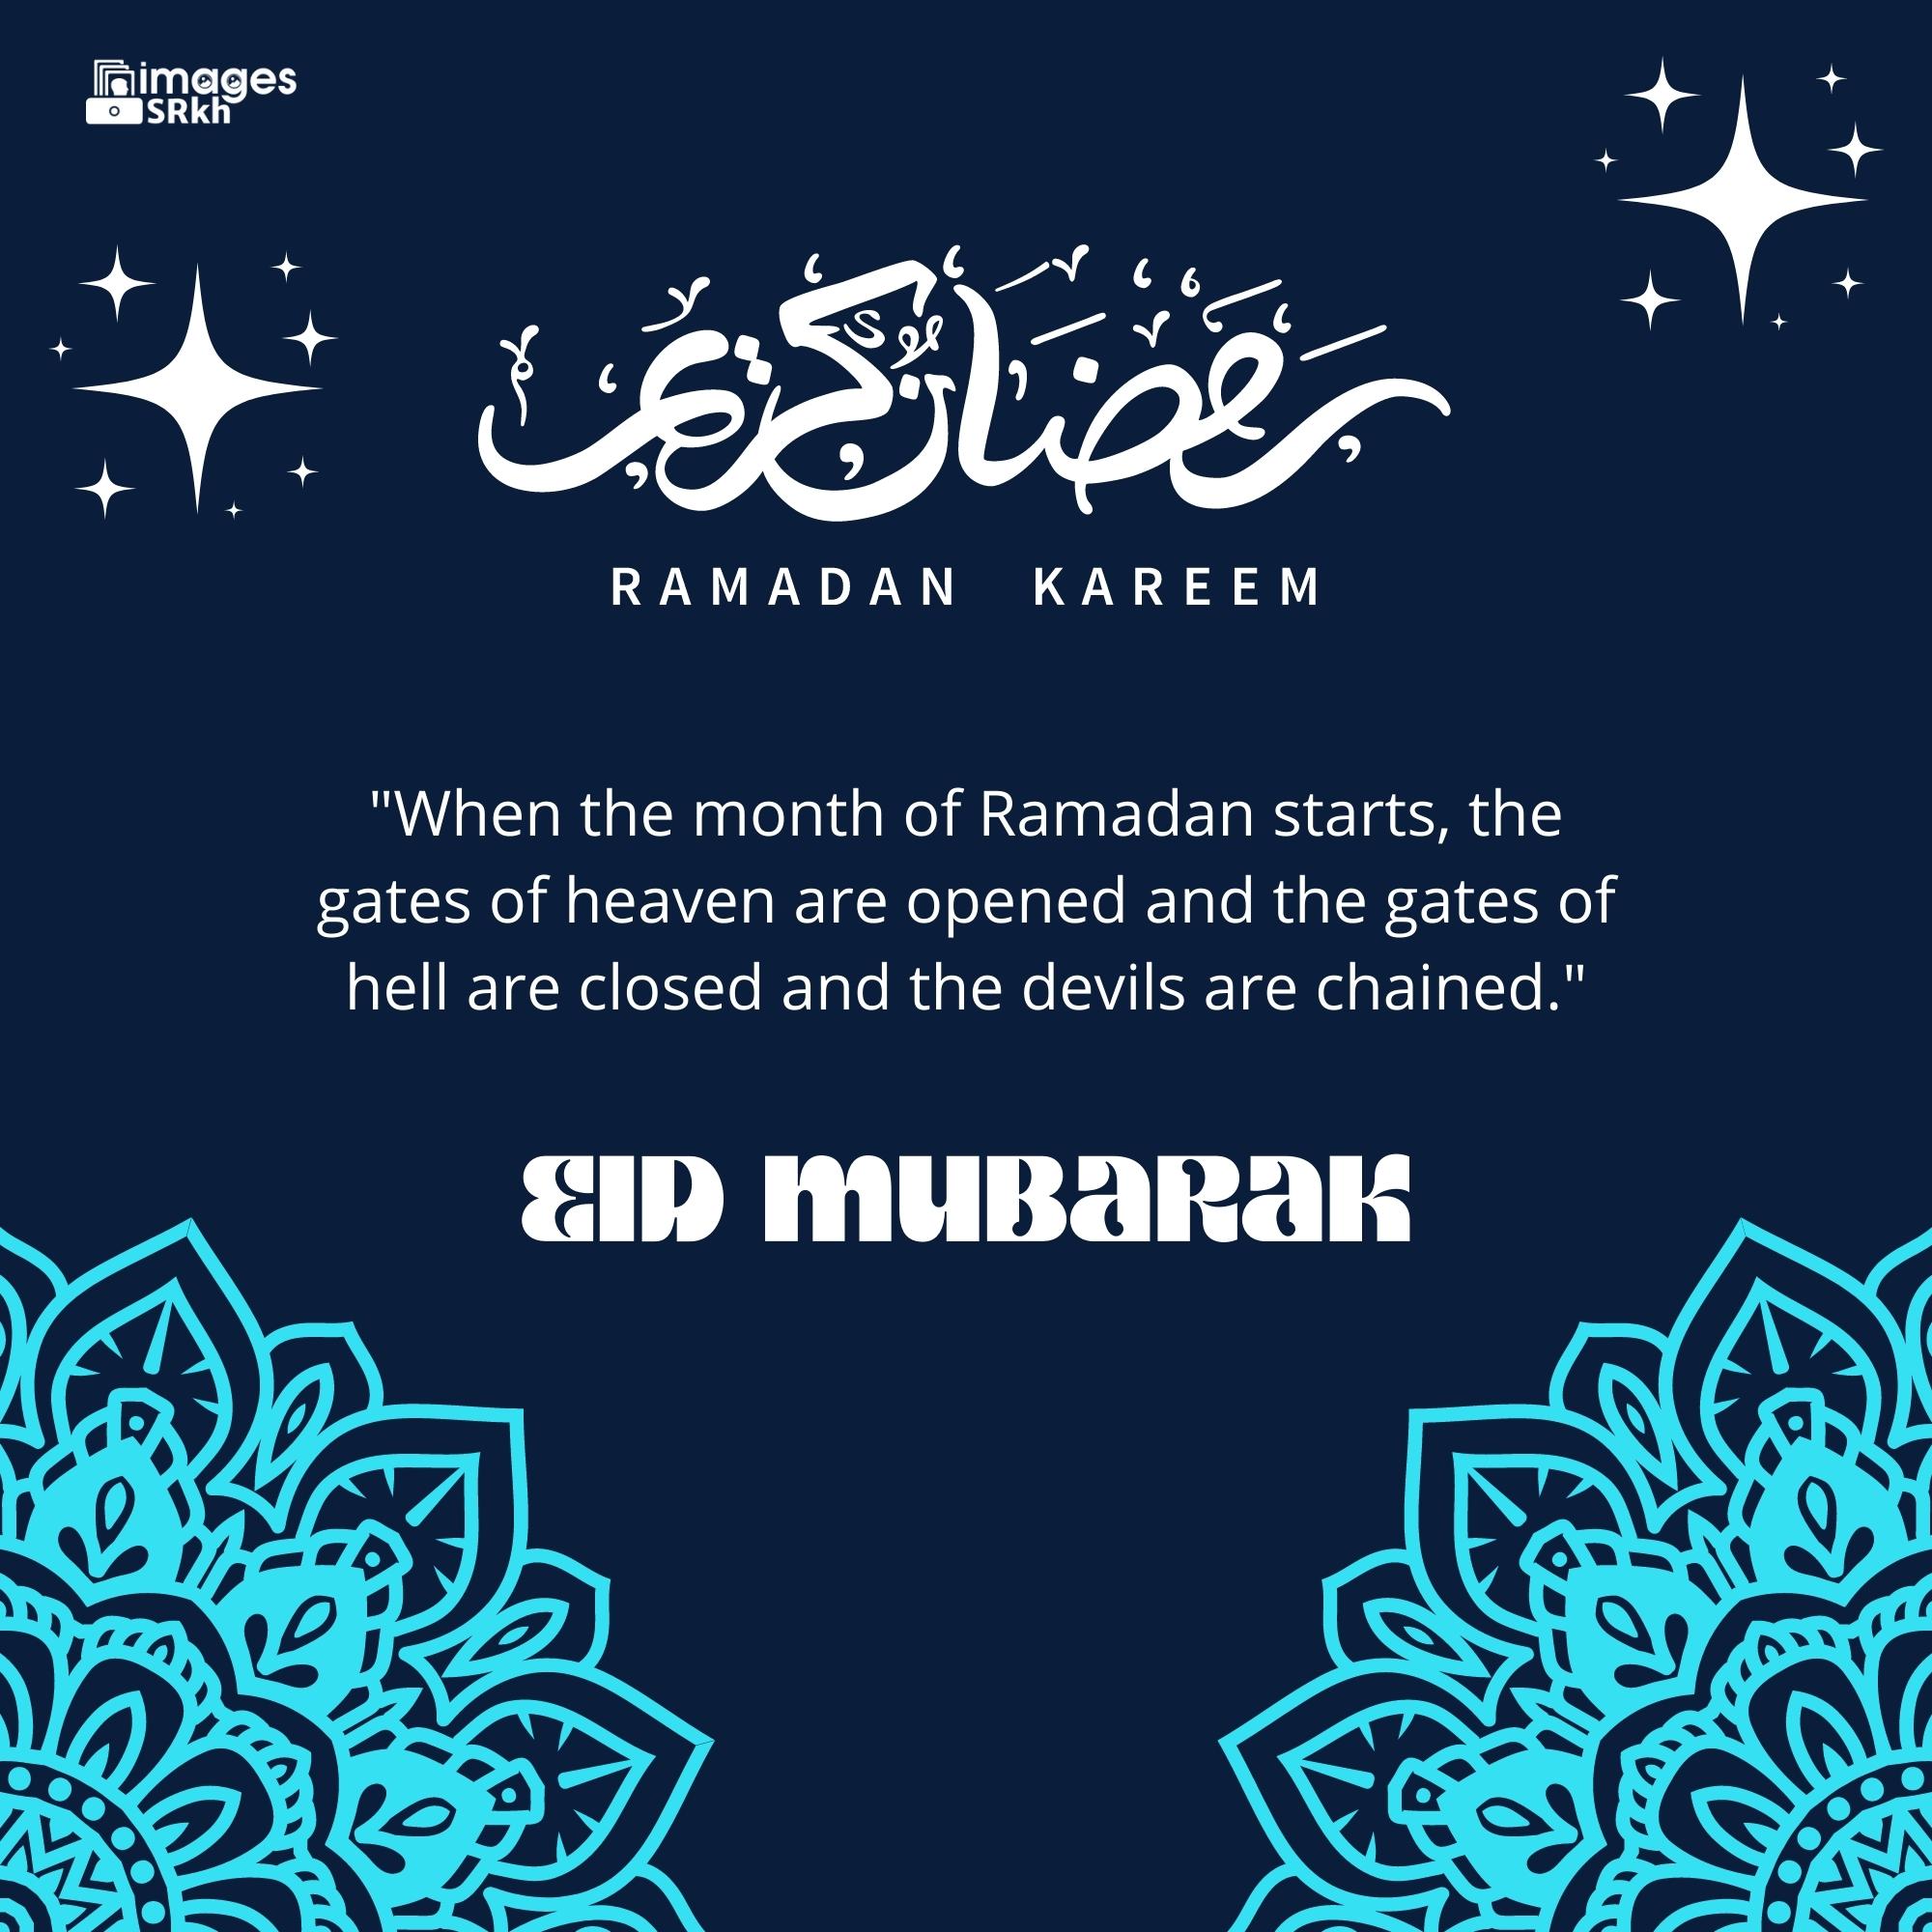 Pics Of Eid Mubarak (2) | Download free in Hd Quality | imagesSRkh